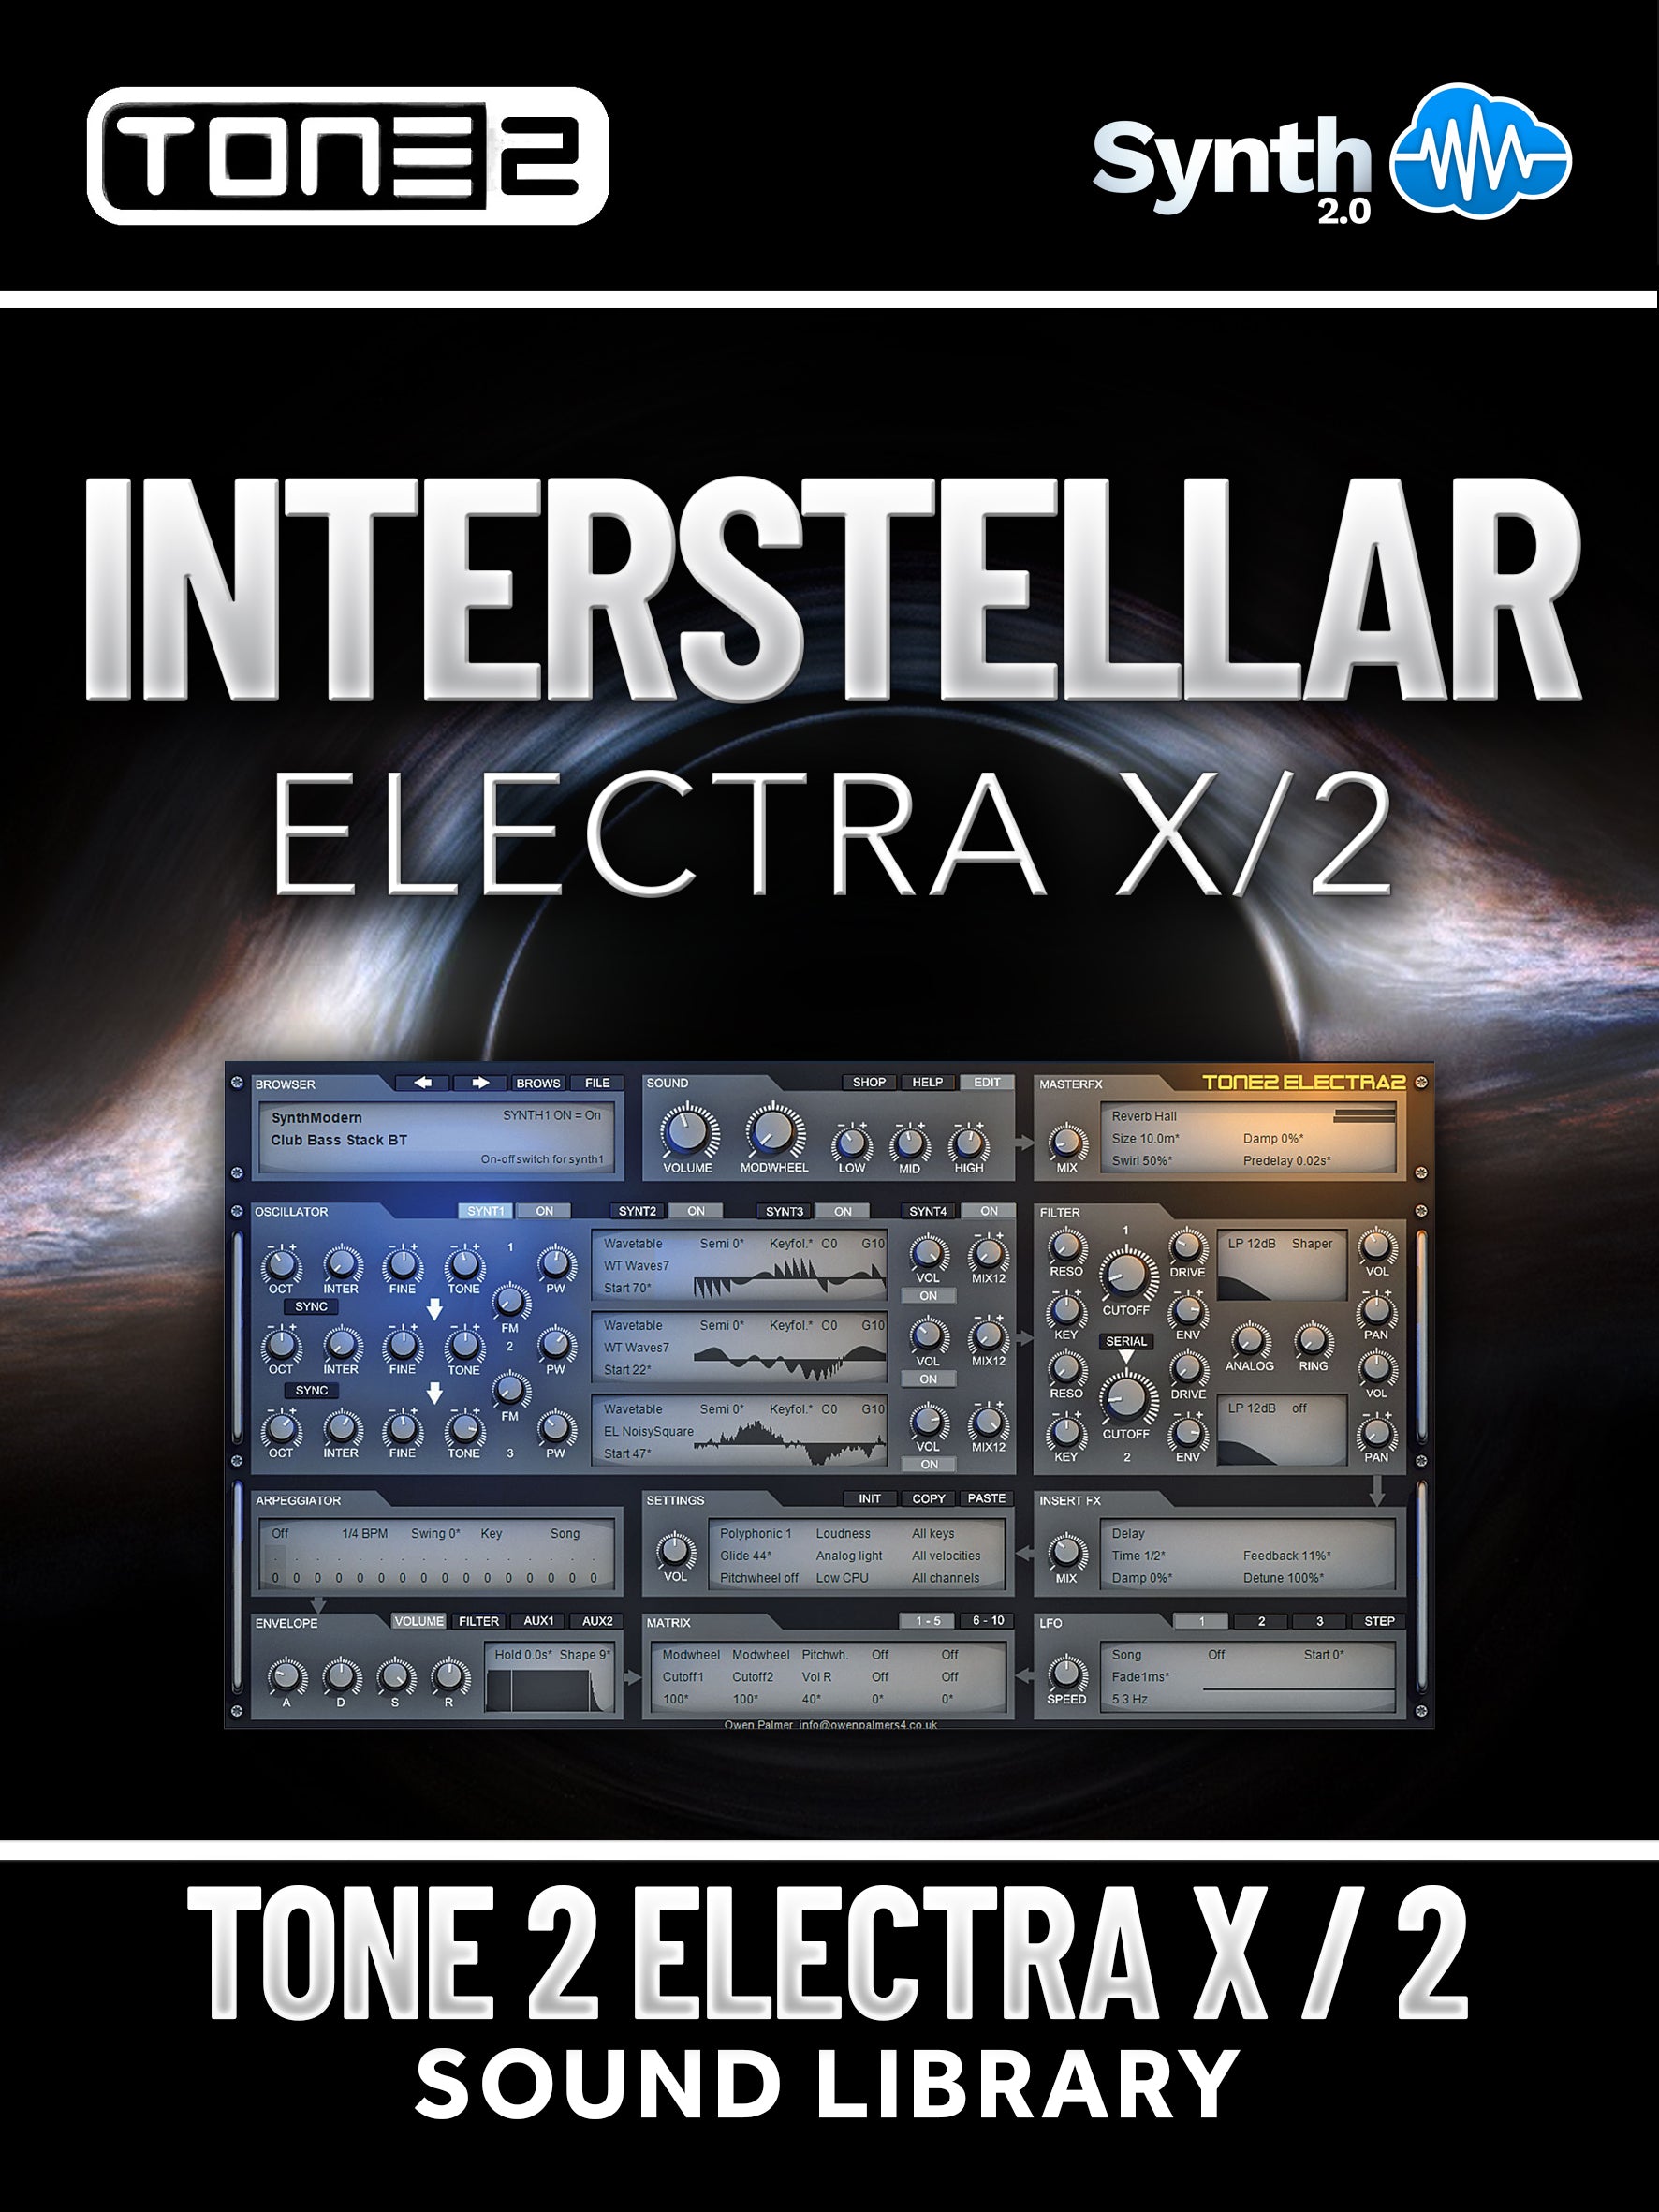 SCL144 - Electra X / 2 Interstellar - Tone 2 Electra X / 2 ( 40 presets )